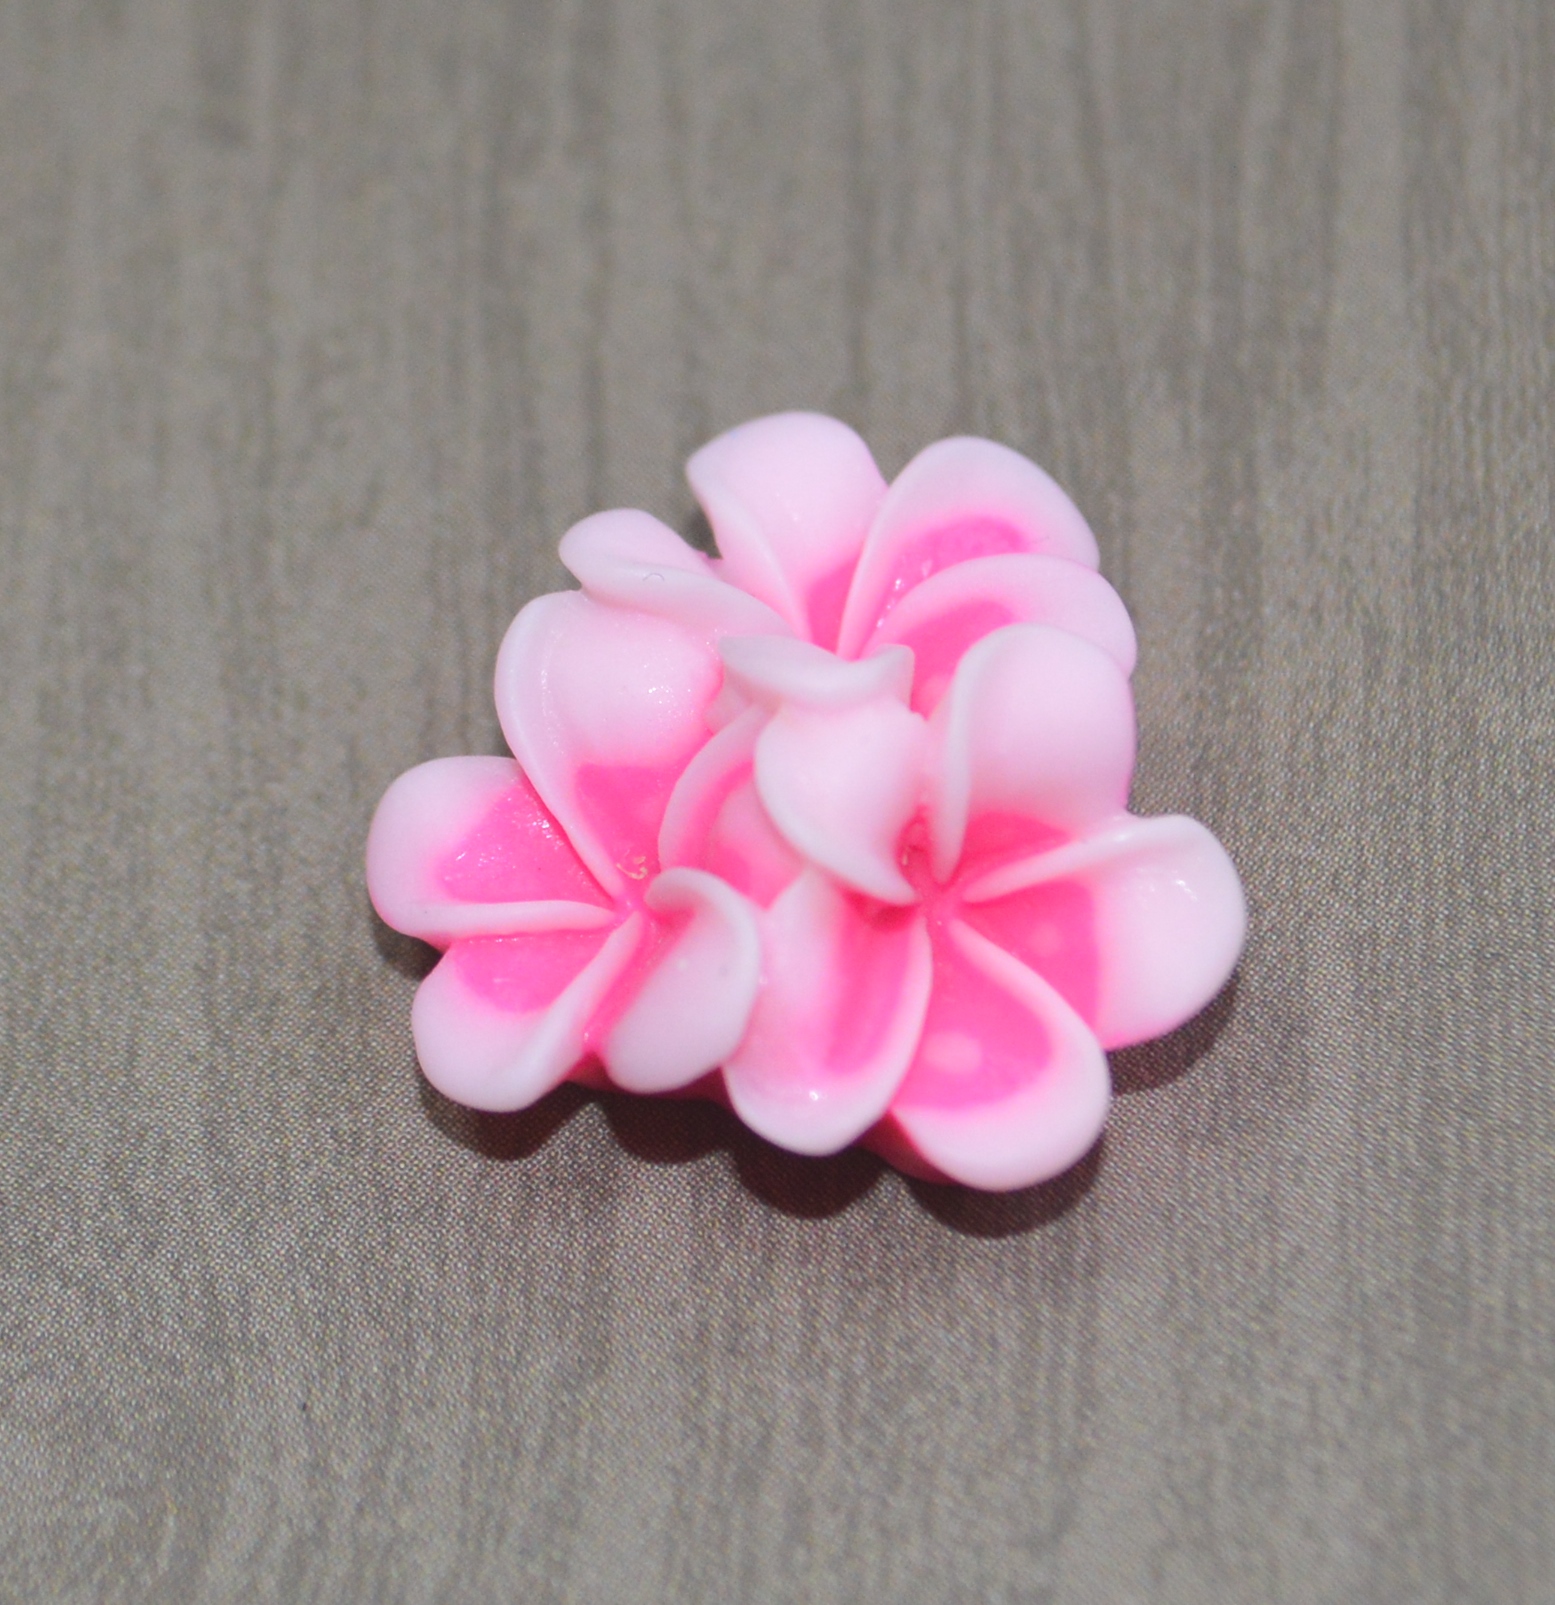 Кабошон Цветок, цвет нежно-розового, размер 21 мм, 1 шт